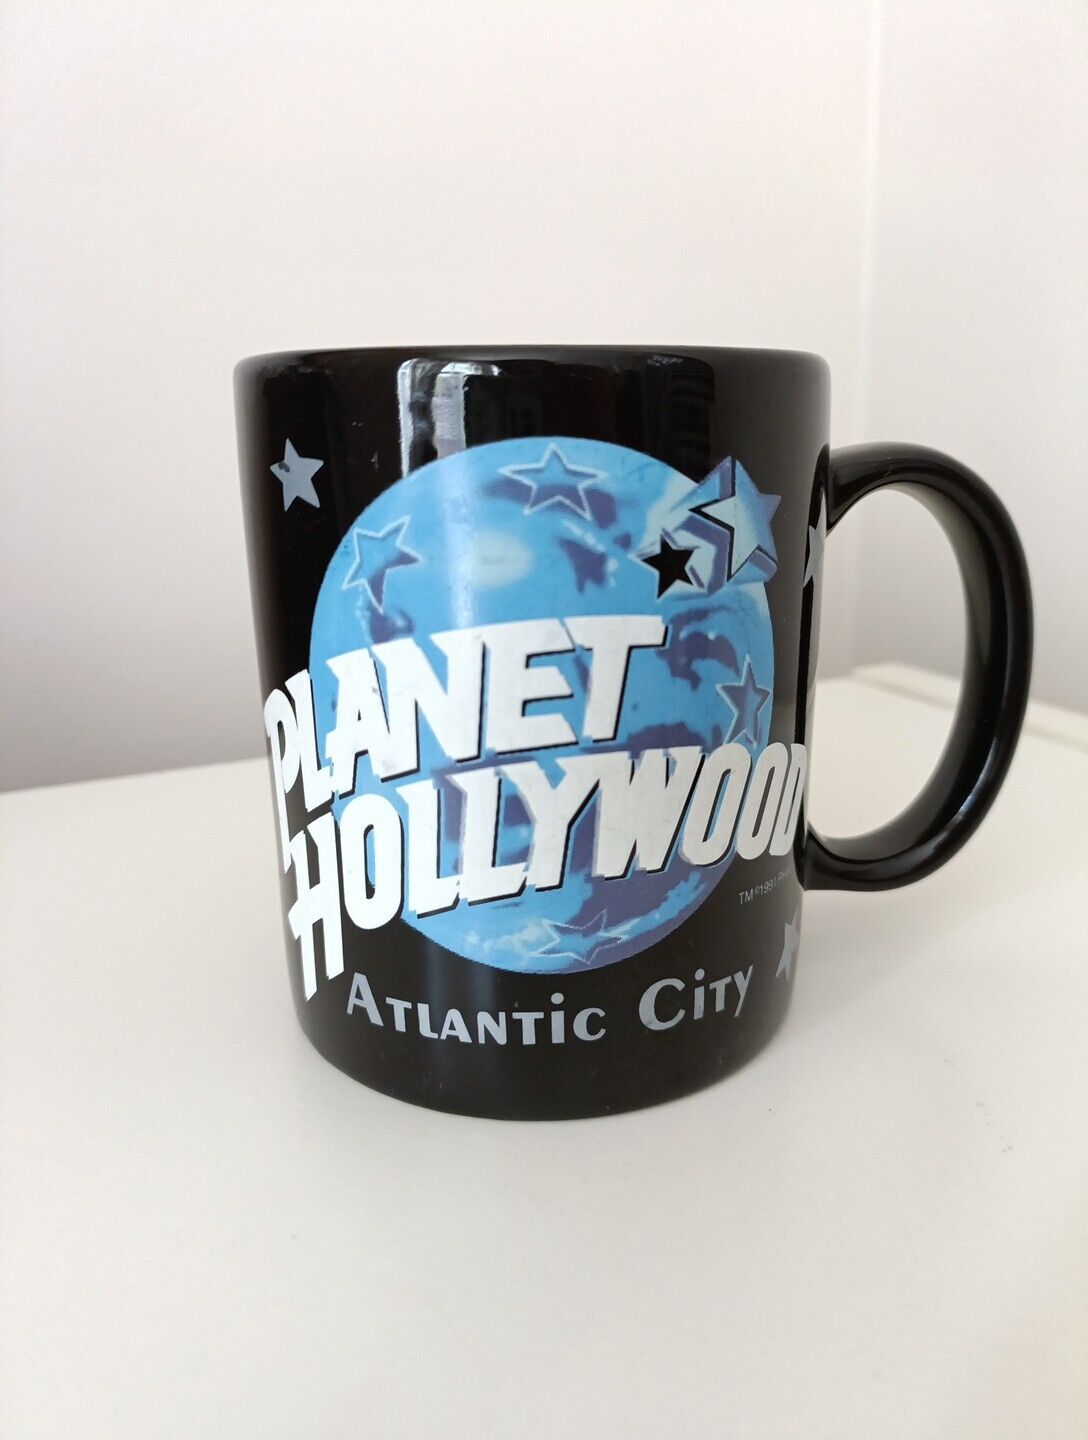 Vintage Planet Hollywood Black Coffee Cup Mug Atlantic City 1991